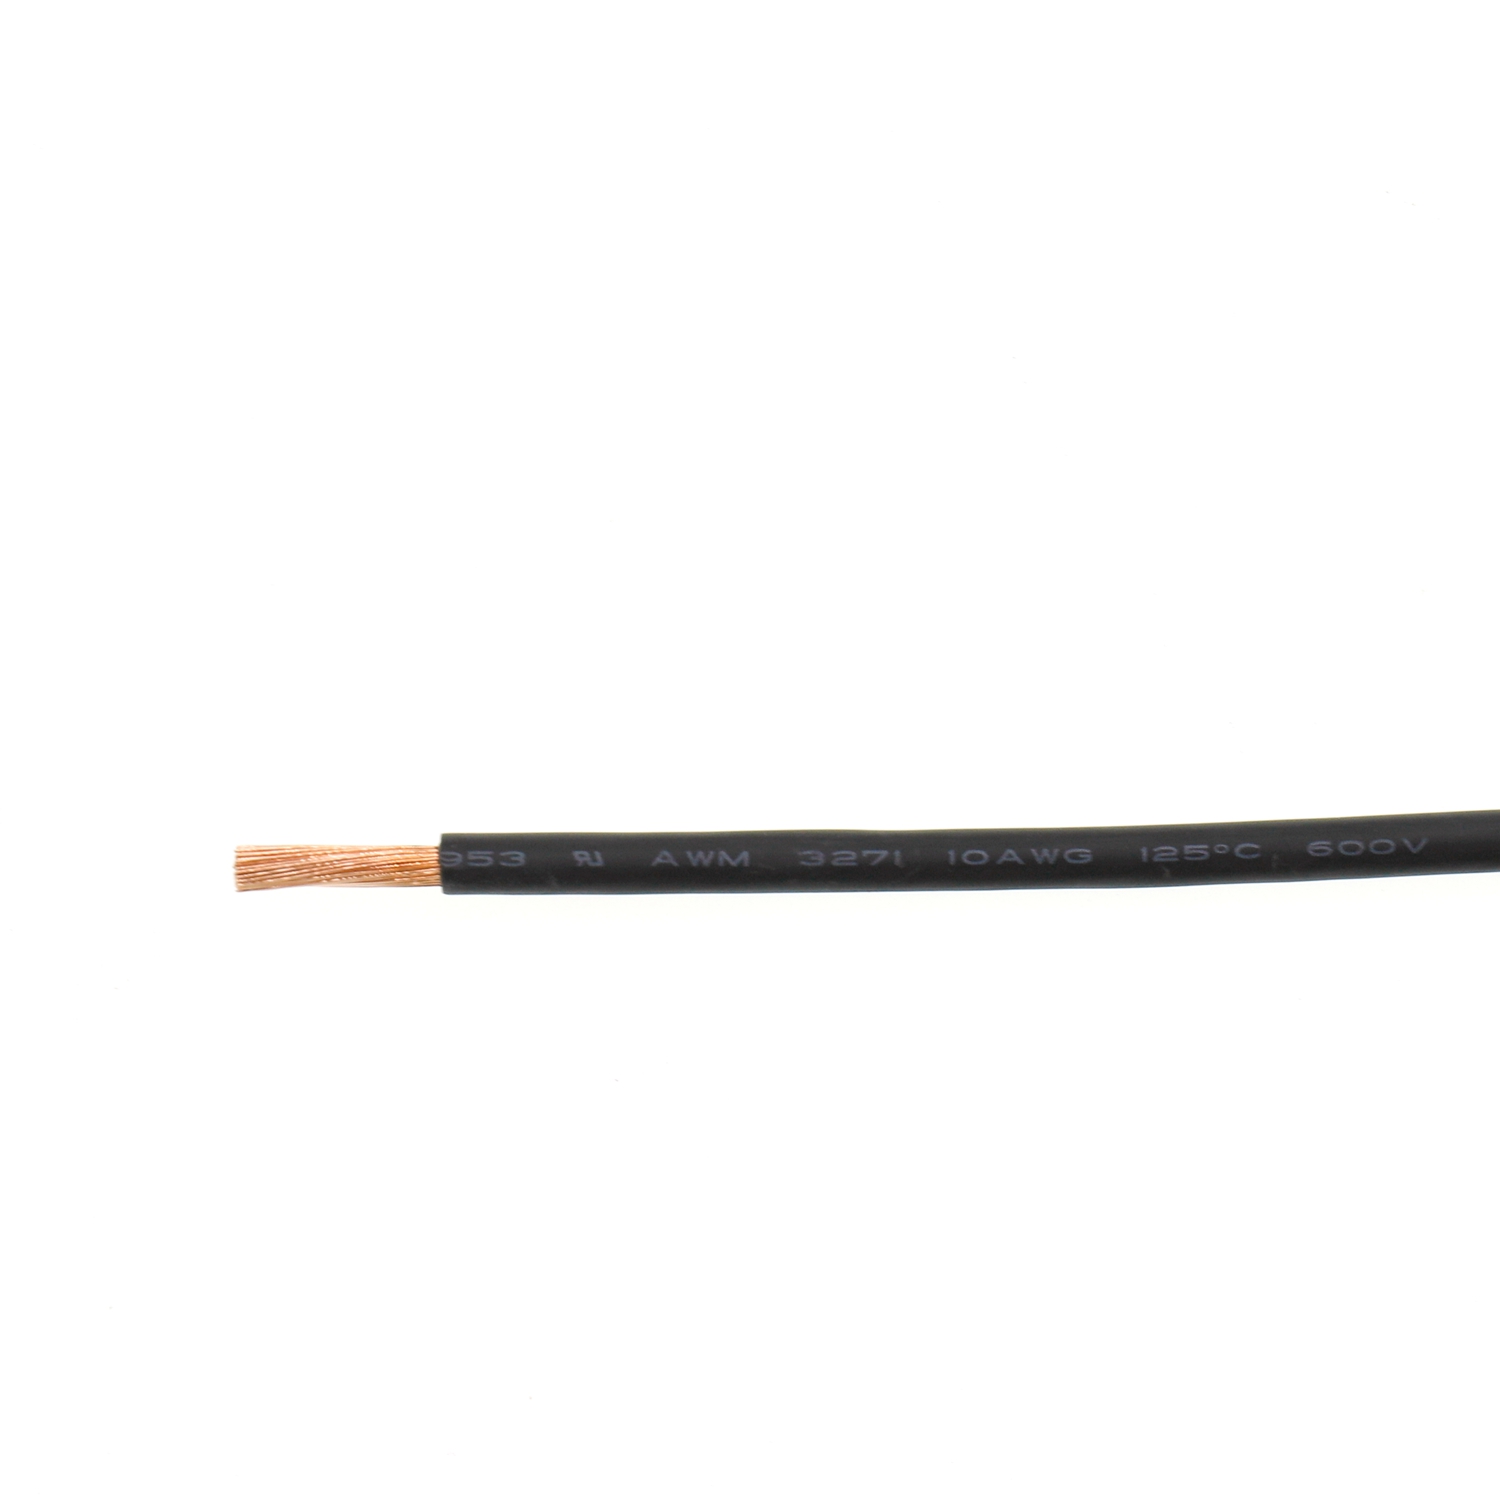 UL3271 10AWG Bare Copper Hookup Wire Low Smoke UL AWM Wire 